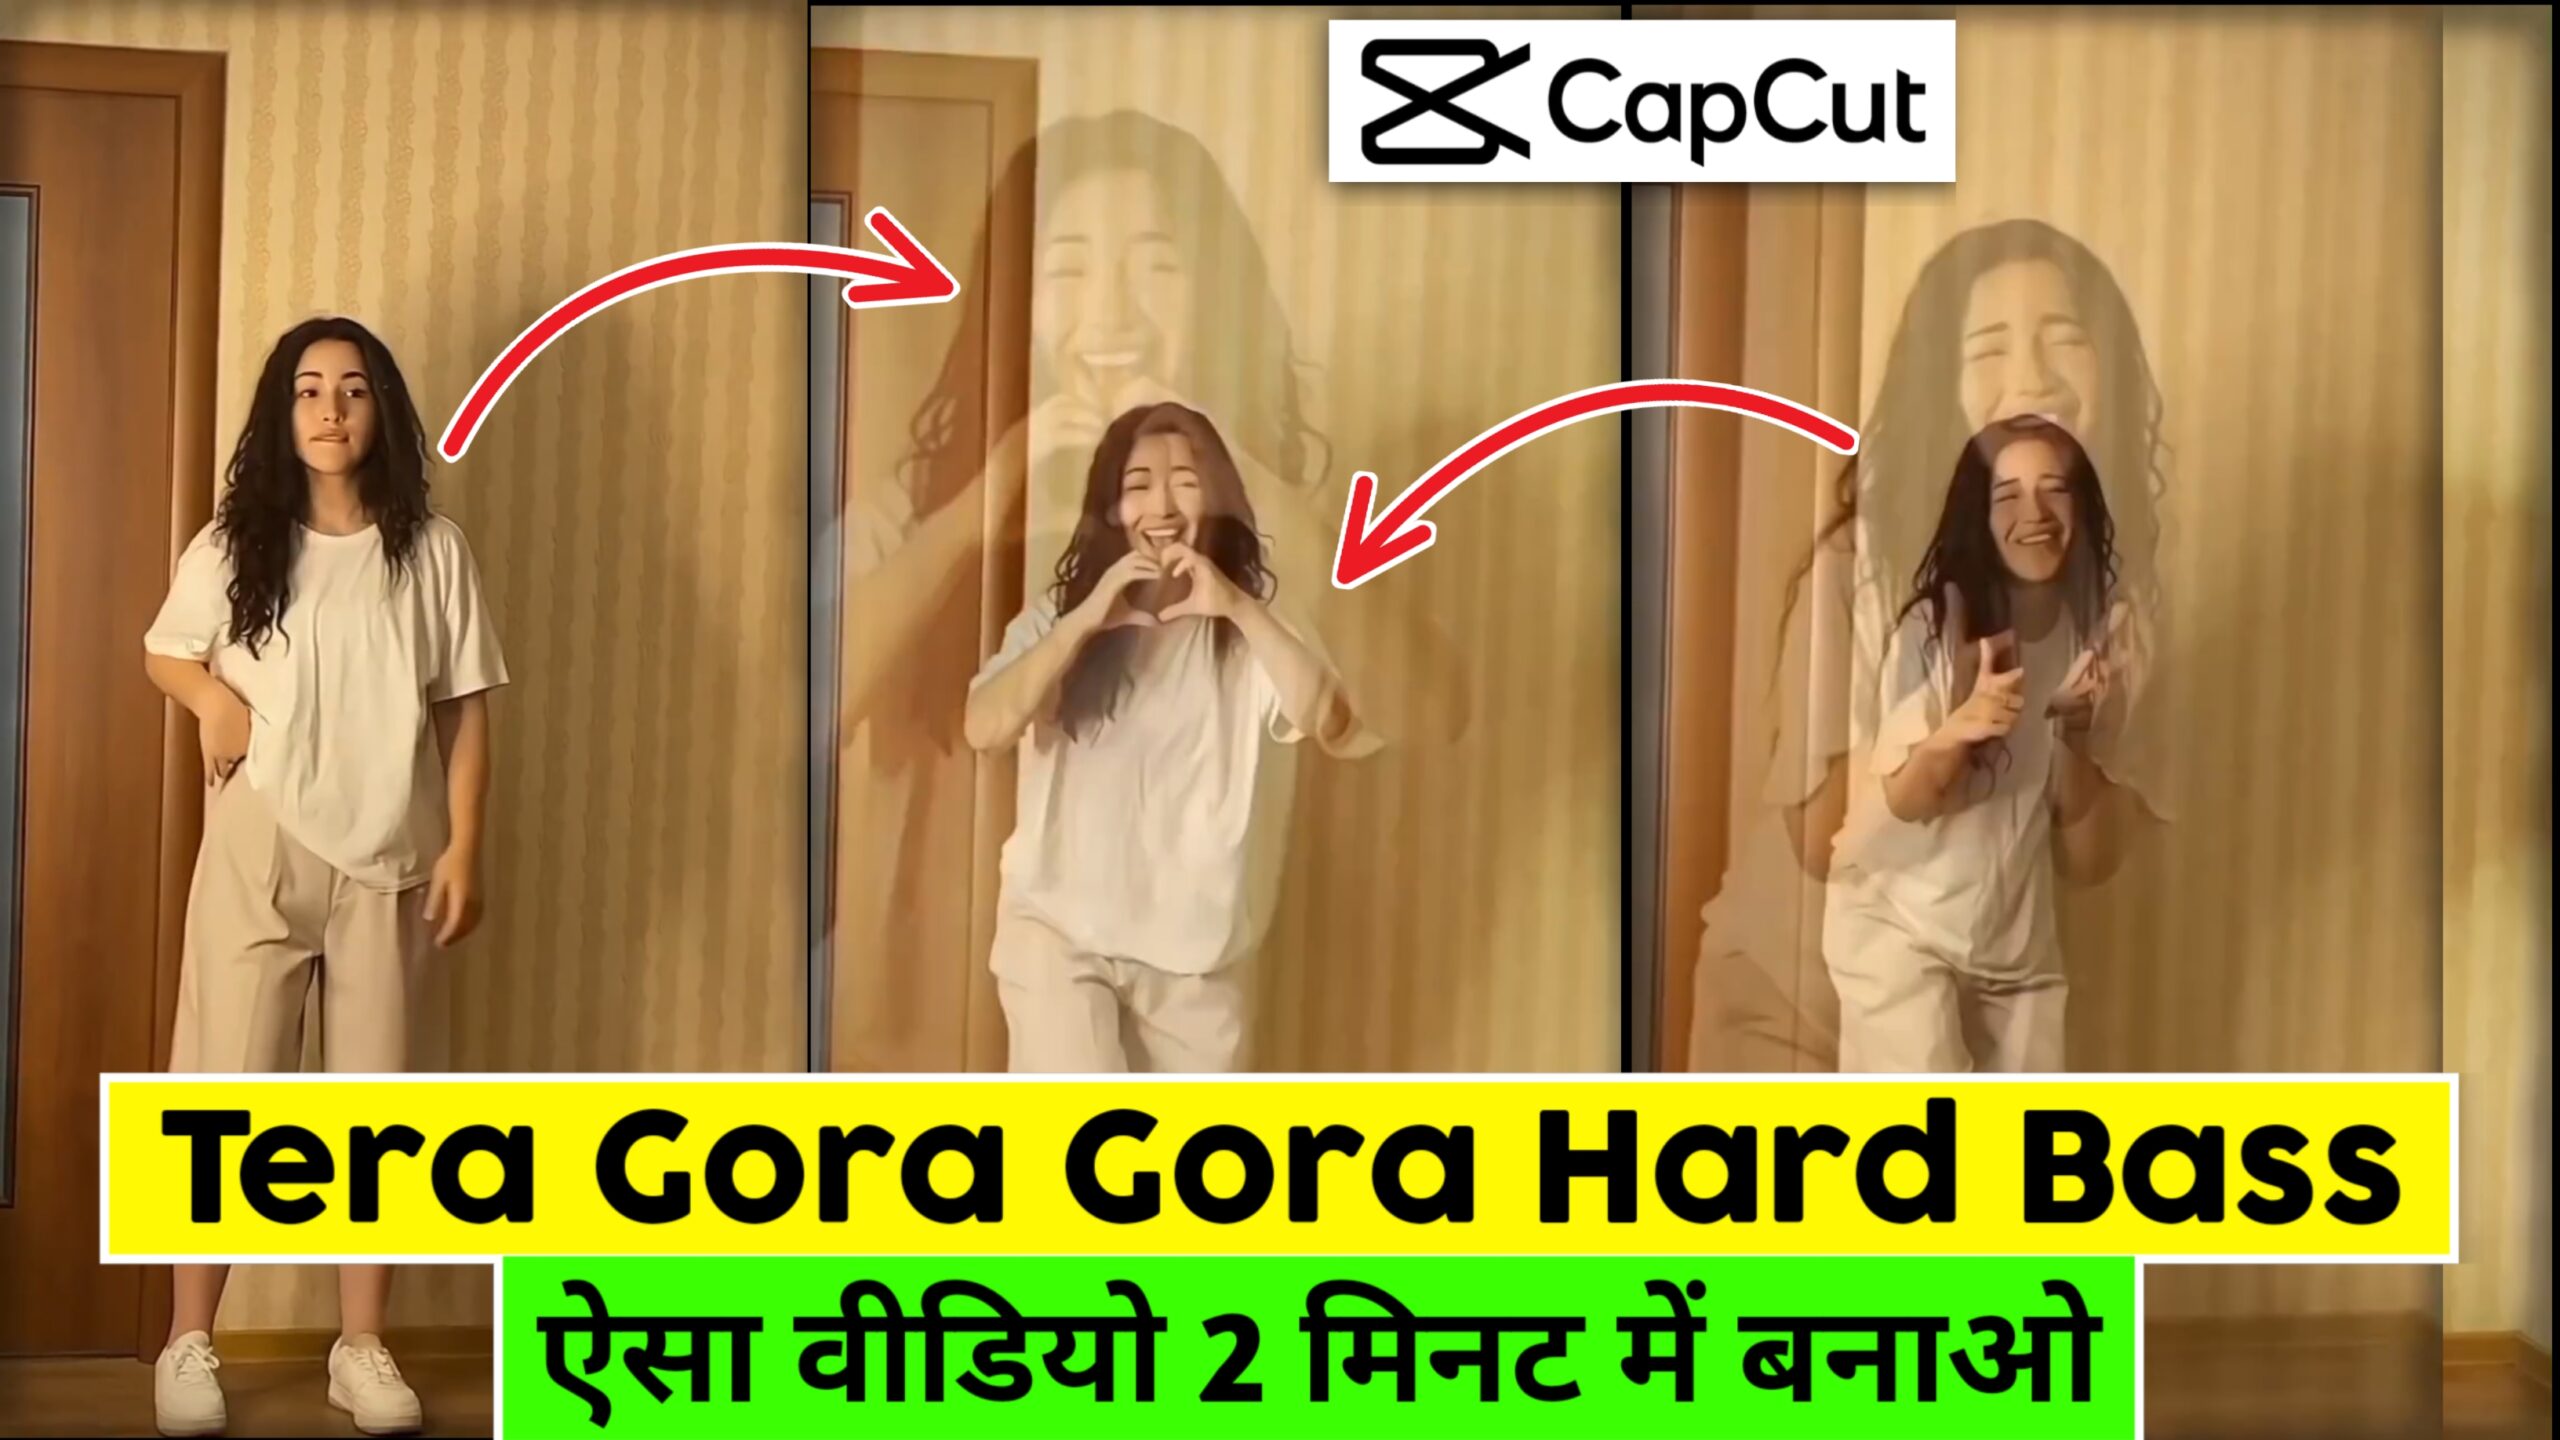 Tera Gora Gora Hard Bass Video Editing Instagram Reels Video Editing Jsr ka Londa